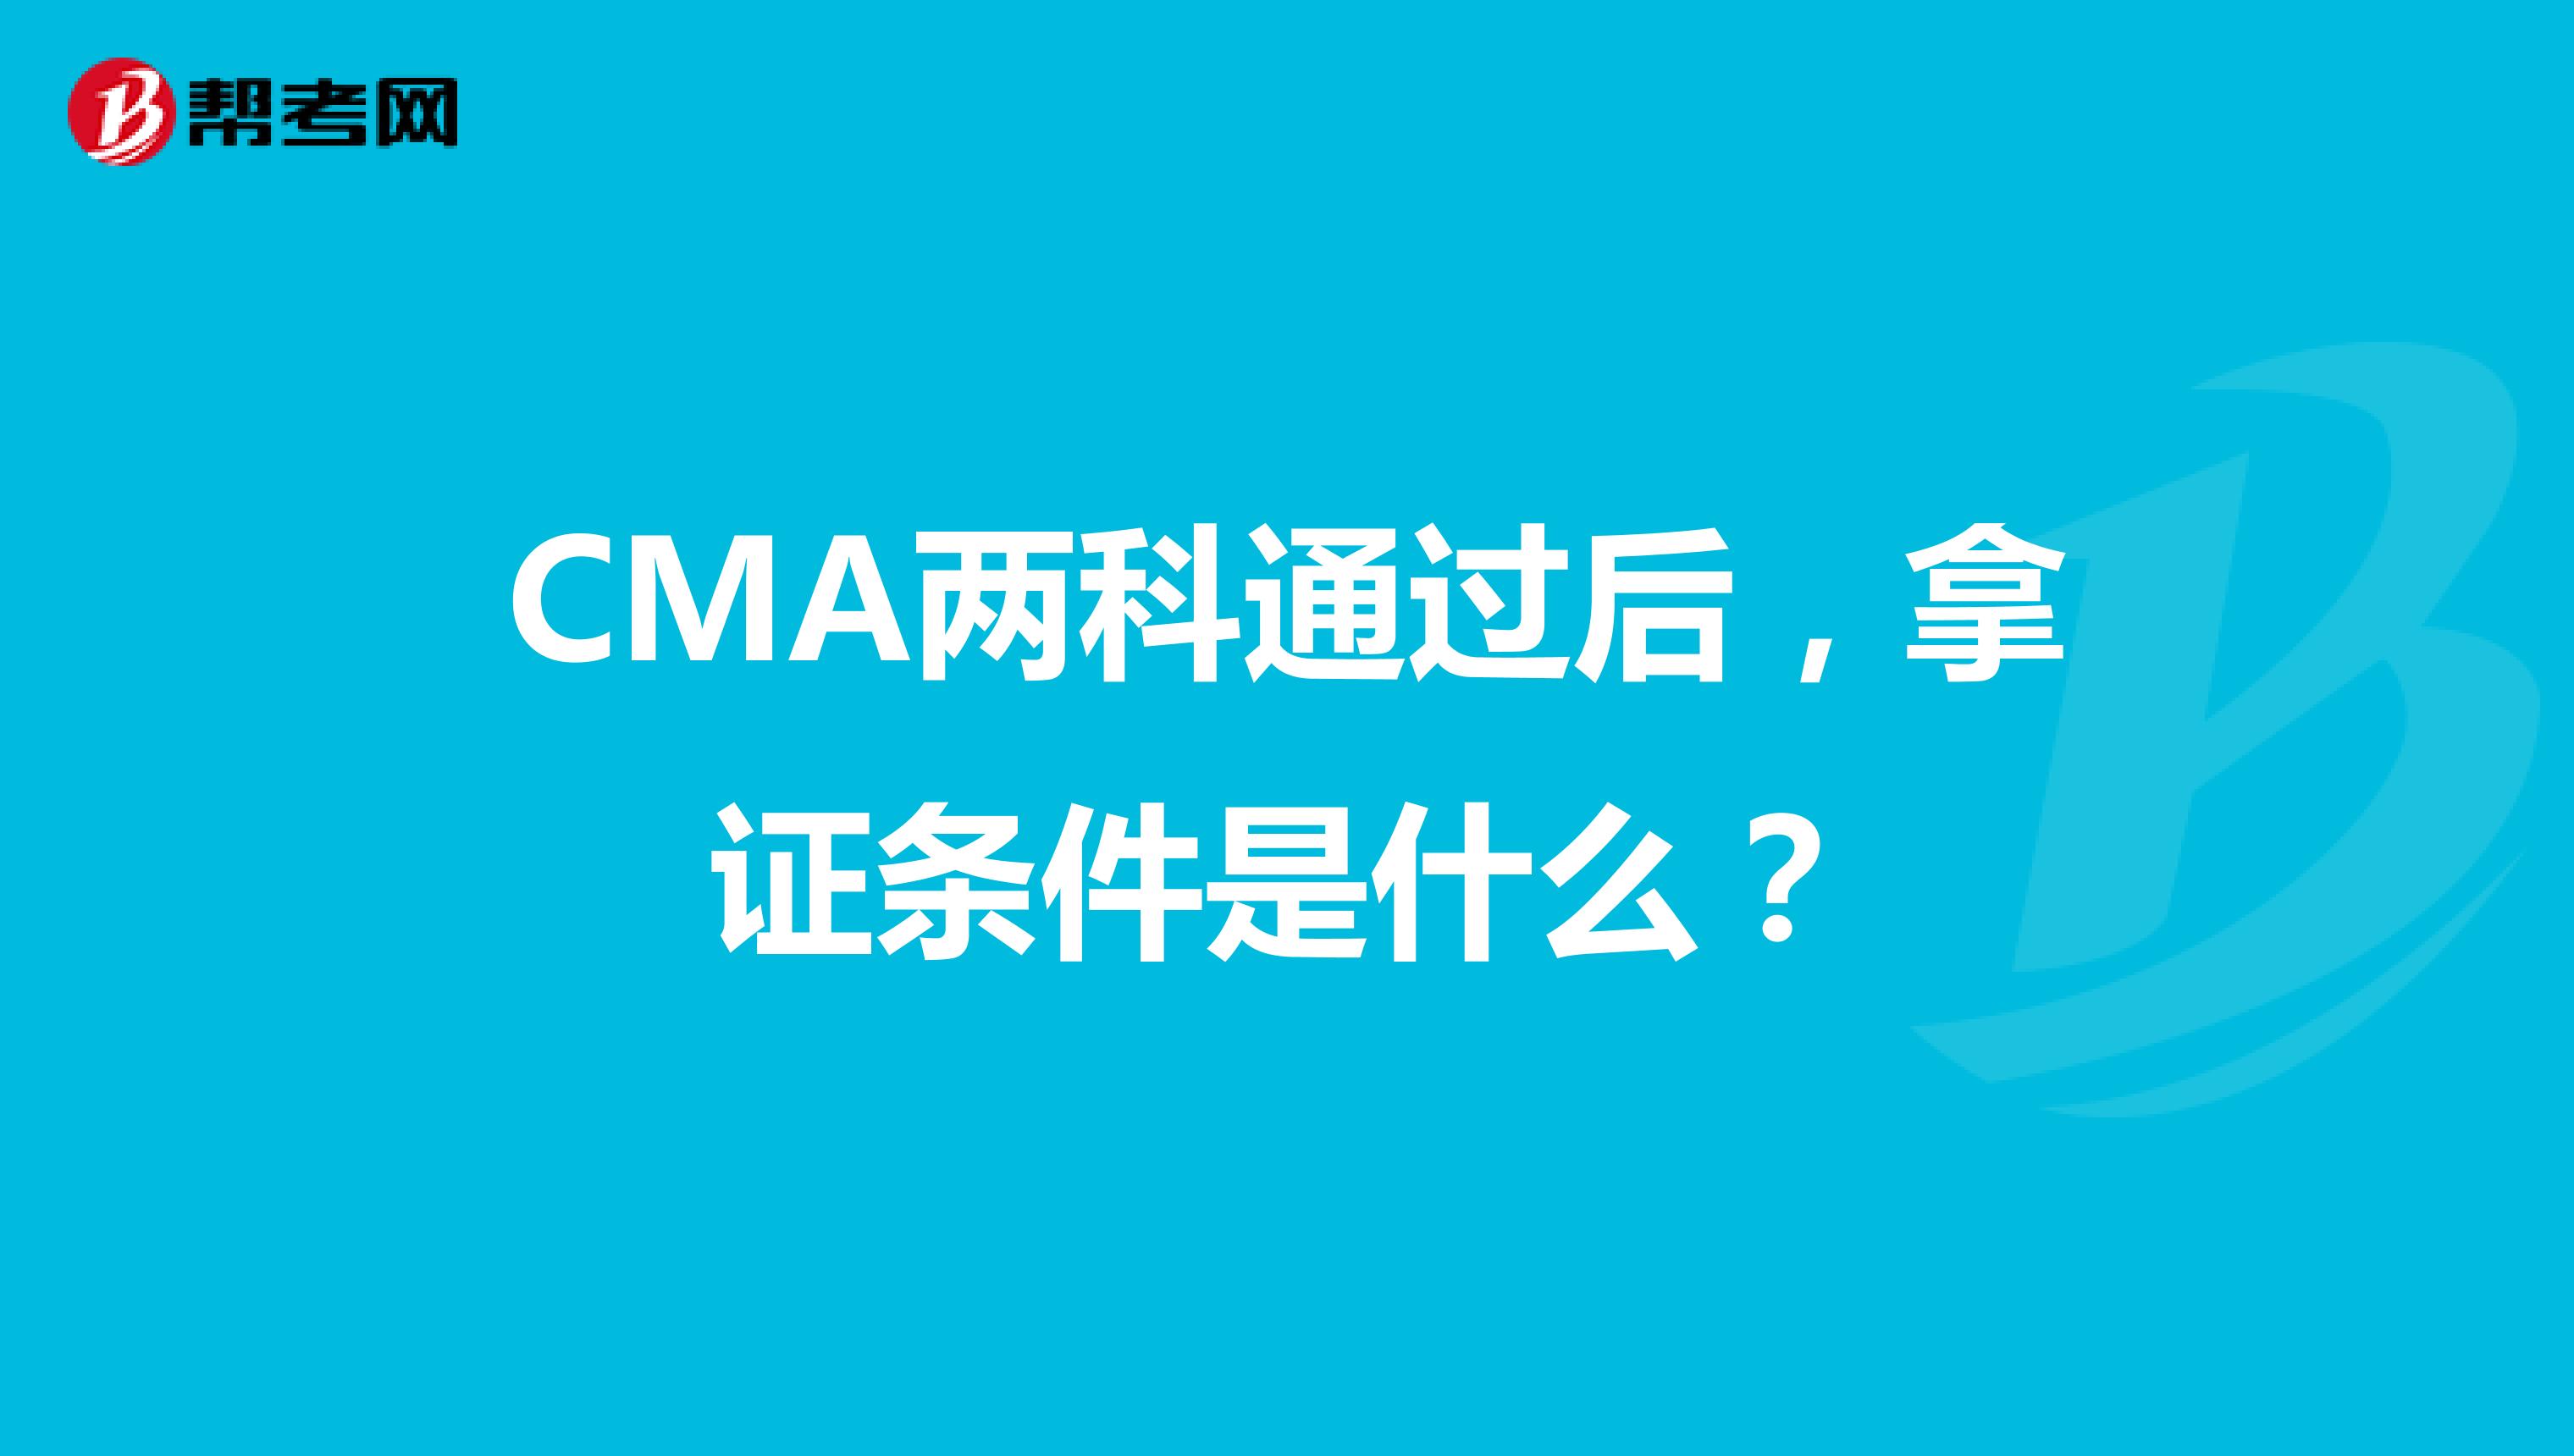 CMA两科通过后，拿证条件是什么？